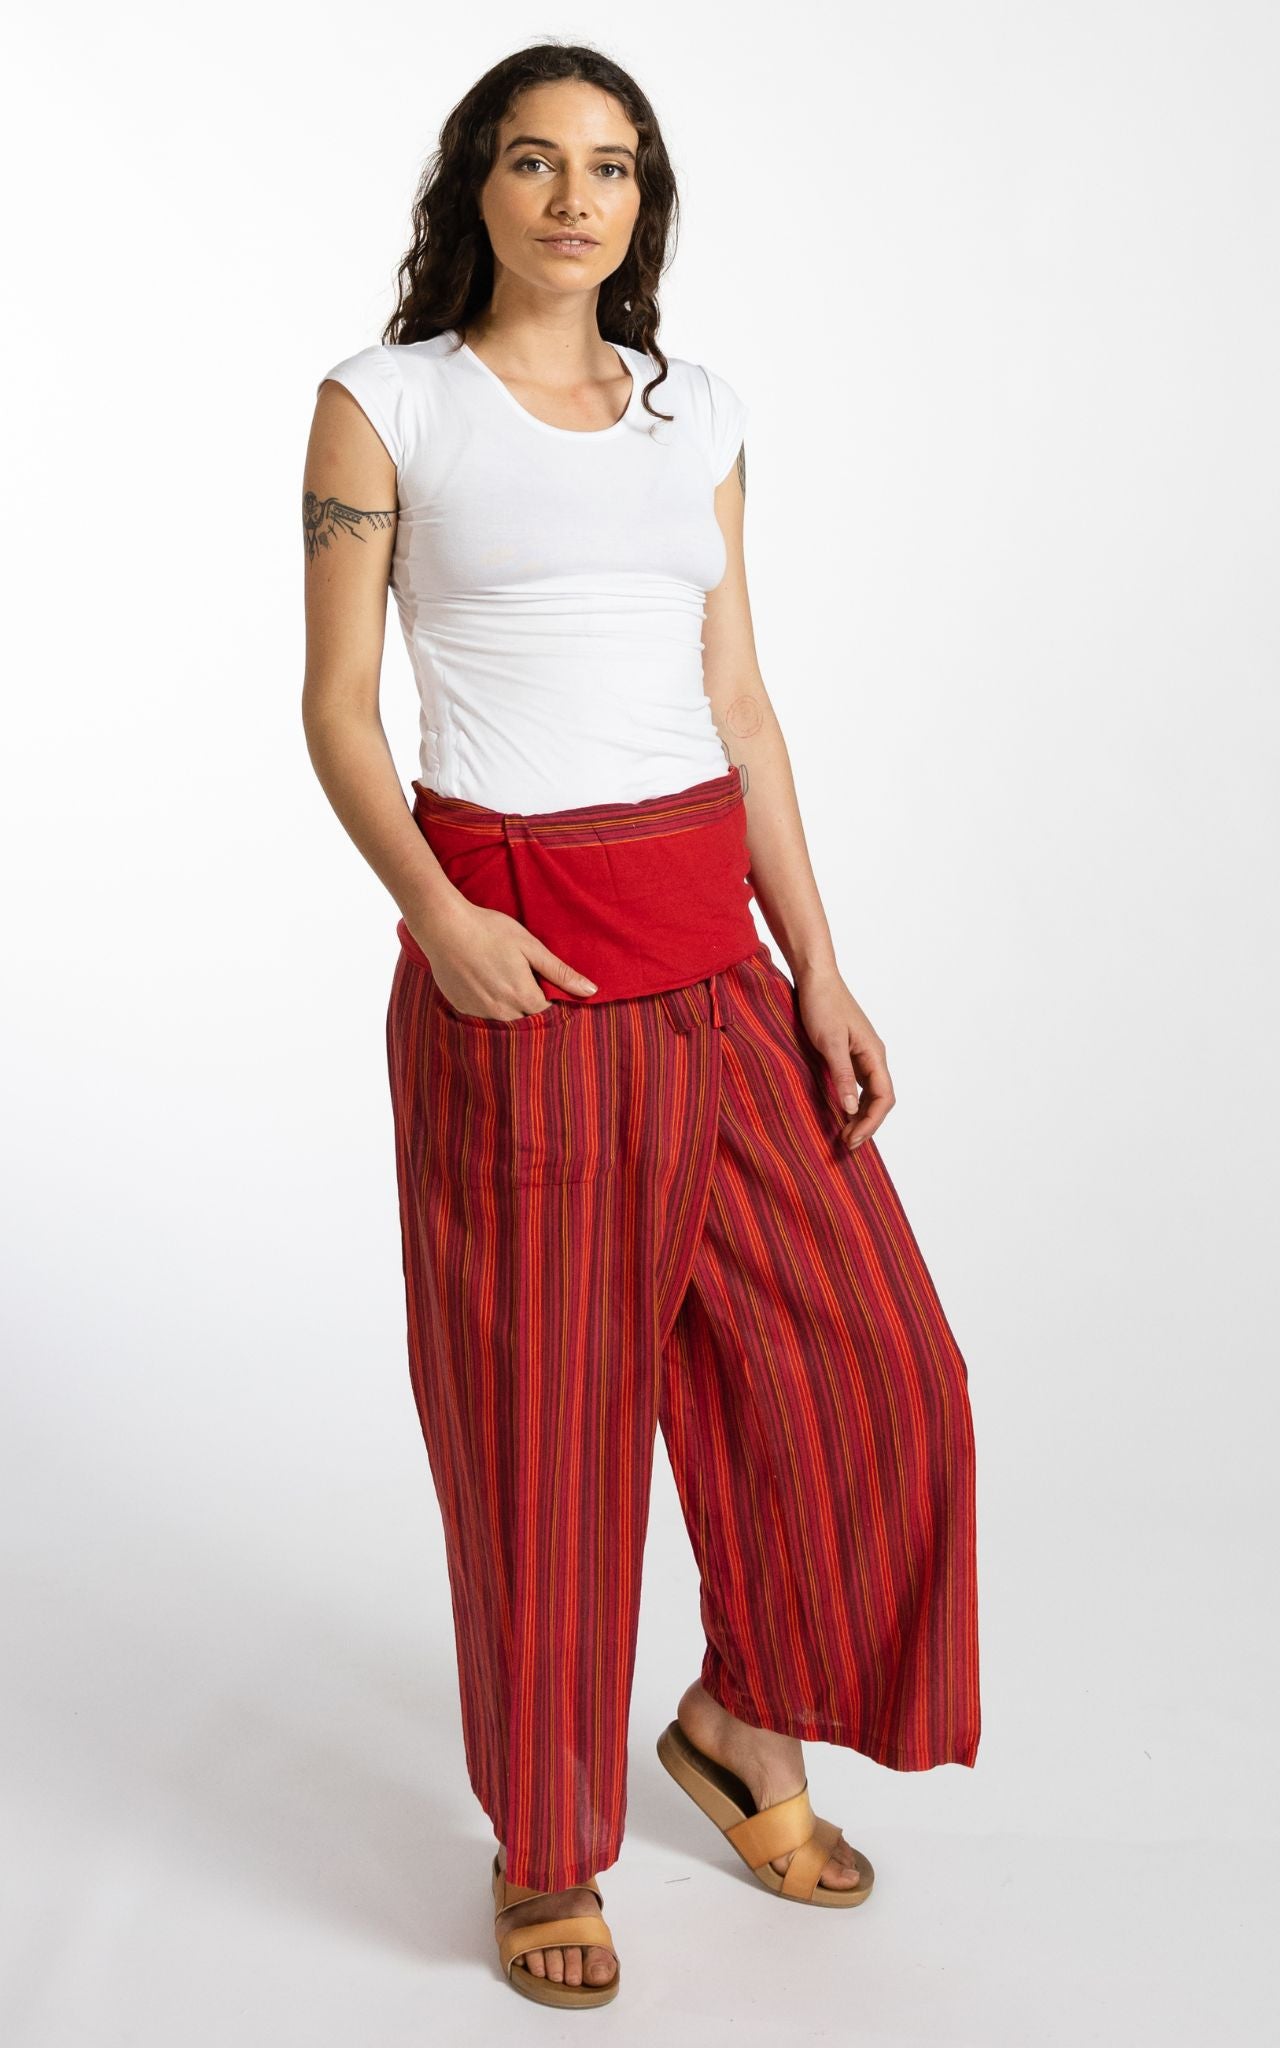 Surya Australia Ethical Cotton Thai Fisherman Pants - Striped Red